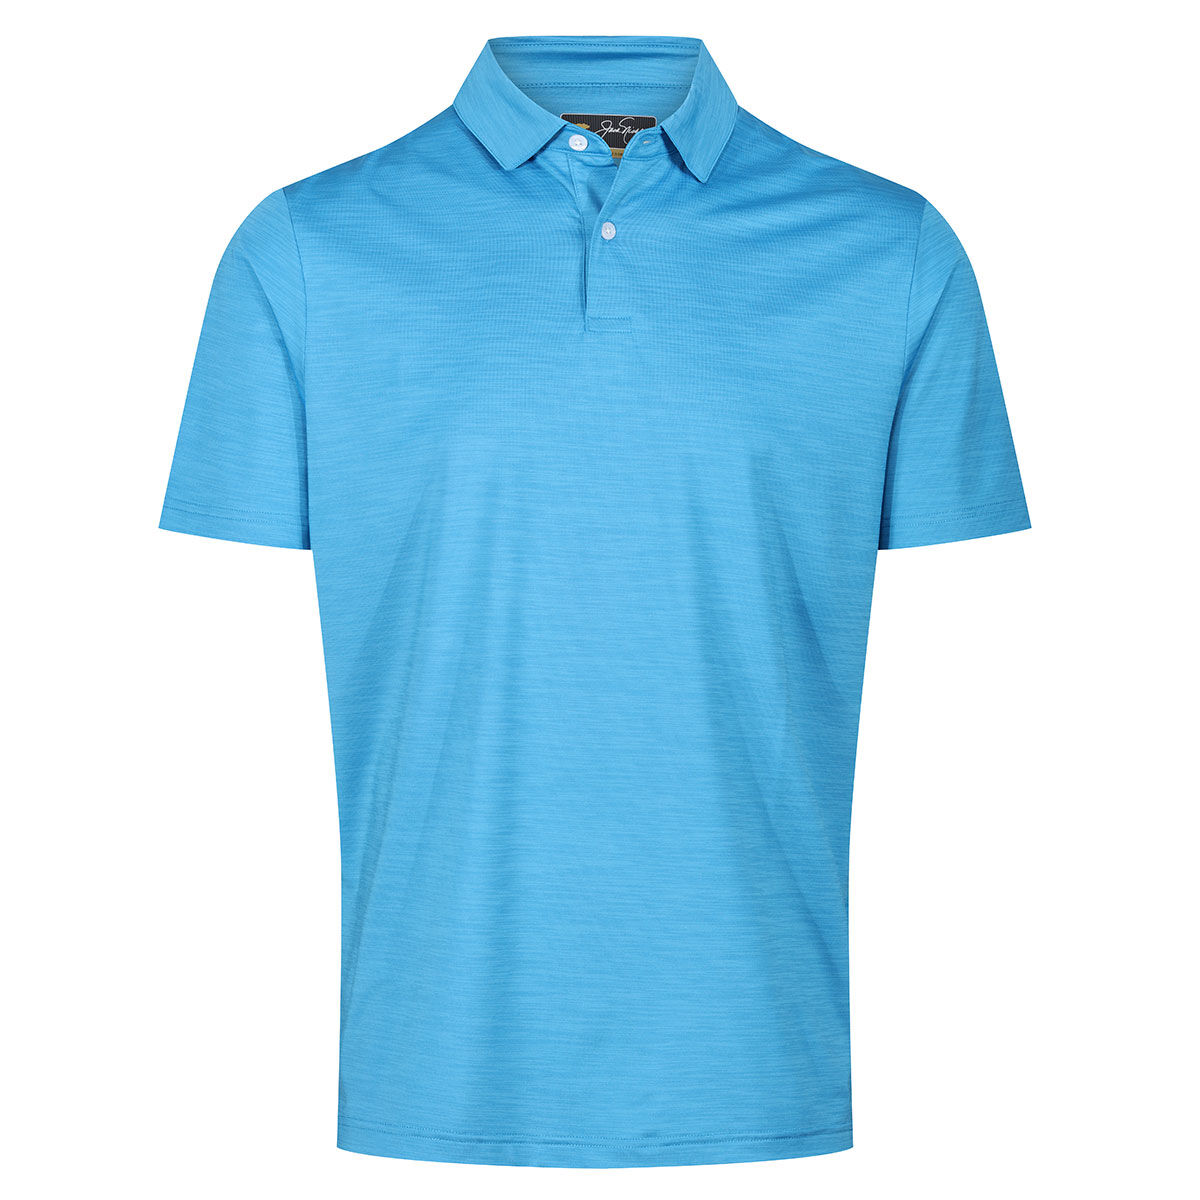 Jack Nicklaus Men's Tonal Golf Polo Shirt, Mens, Light blue, Xl | American Golf von Jack Nicklaus